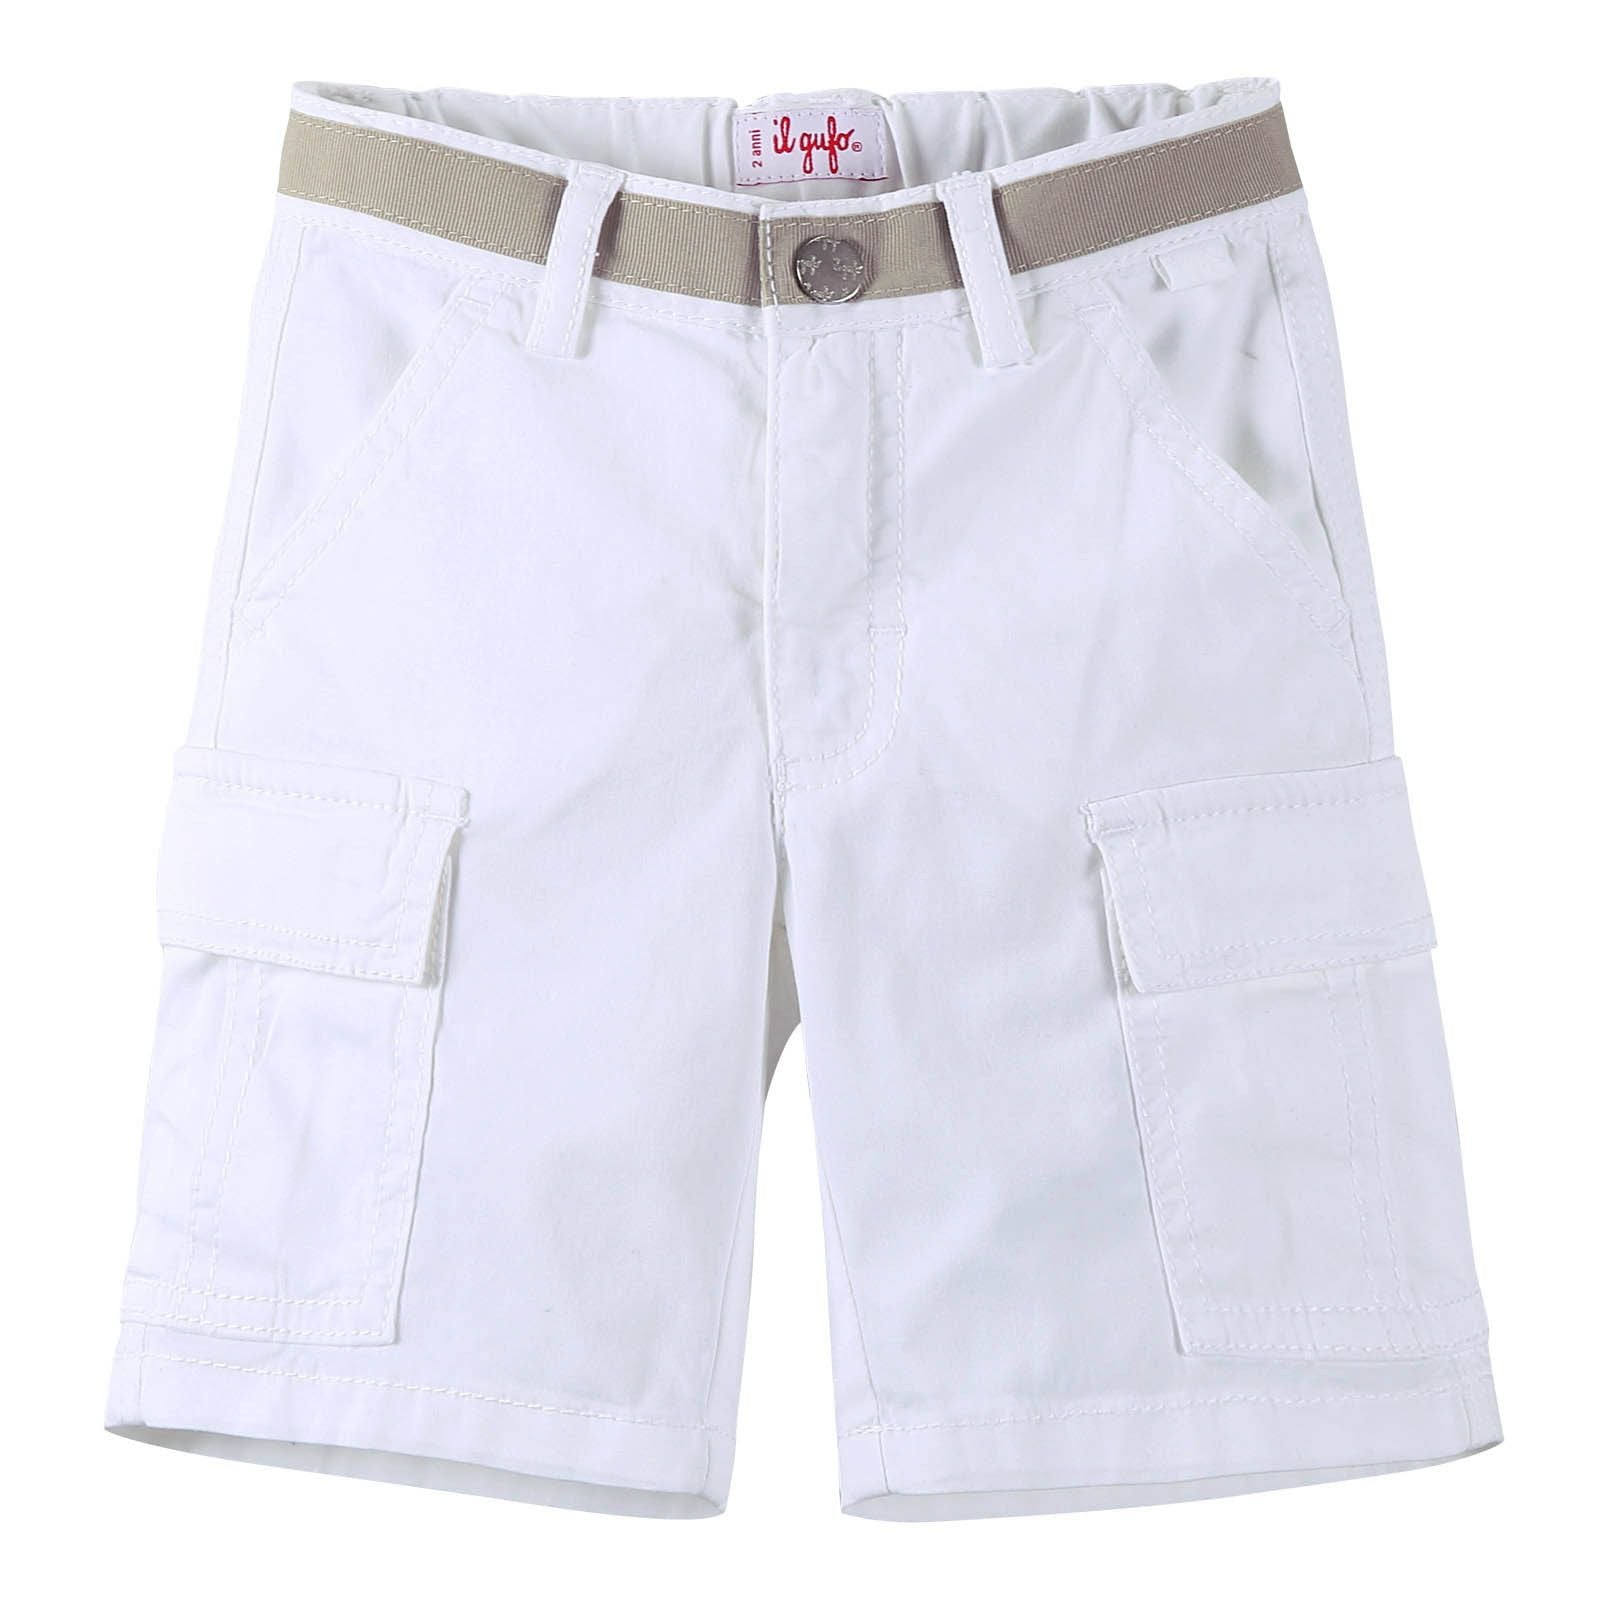 Boys White Cotton Bermuda Shorts With Patch Pockets - CÉMAROSE | Children's Fashion Store - 1